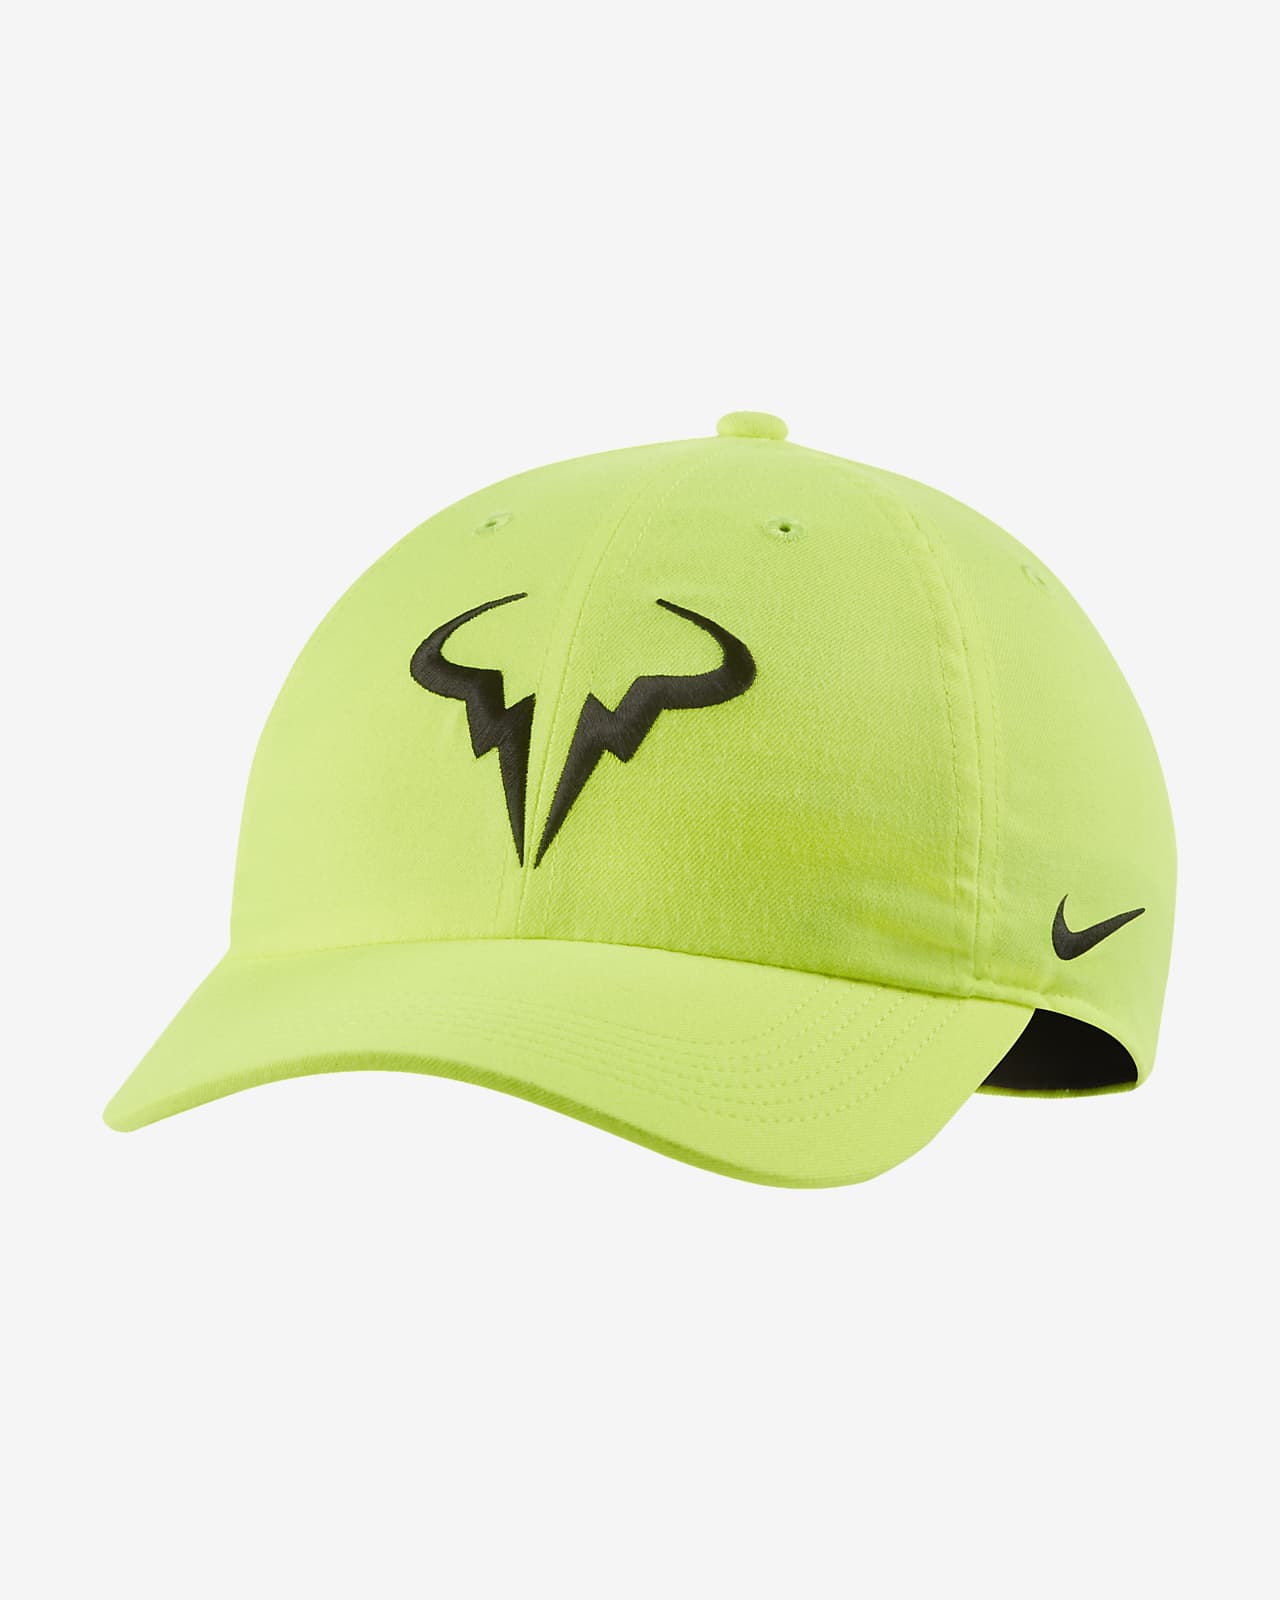 nike court tennis hat